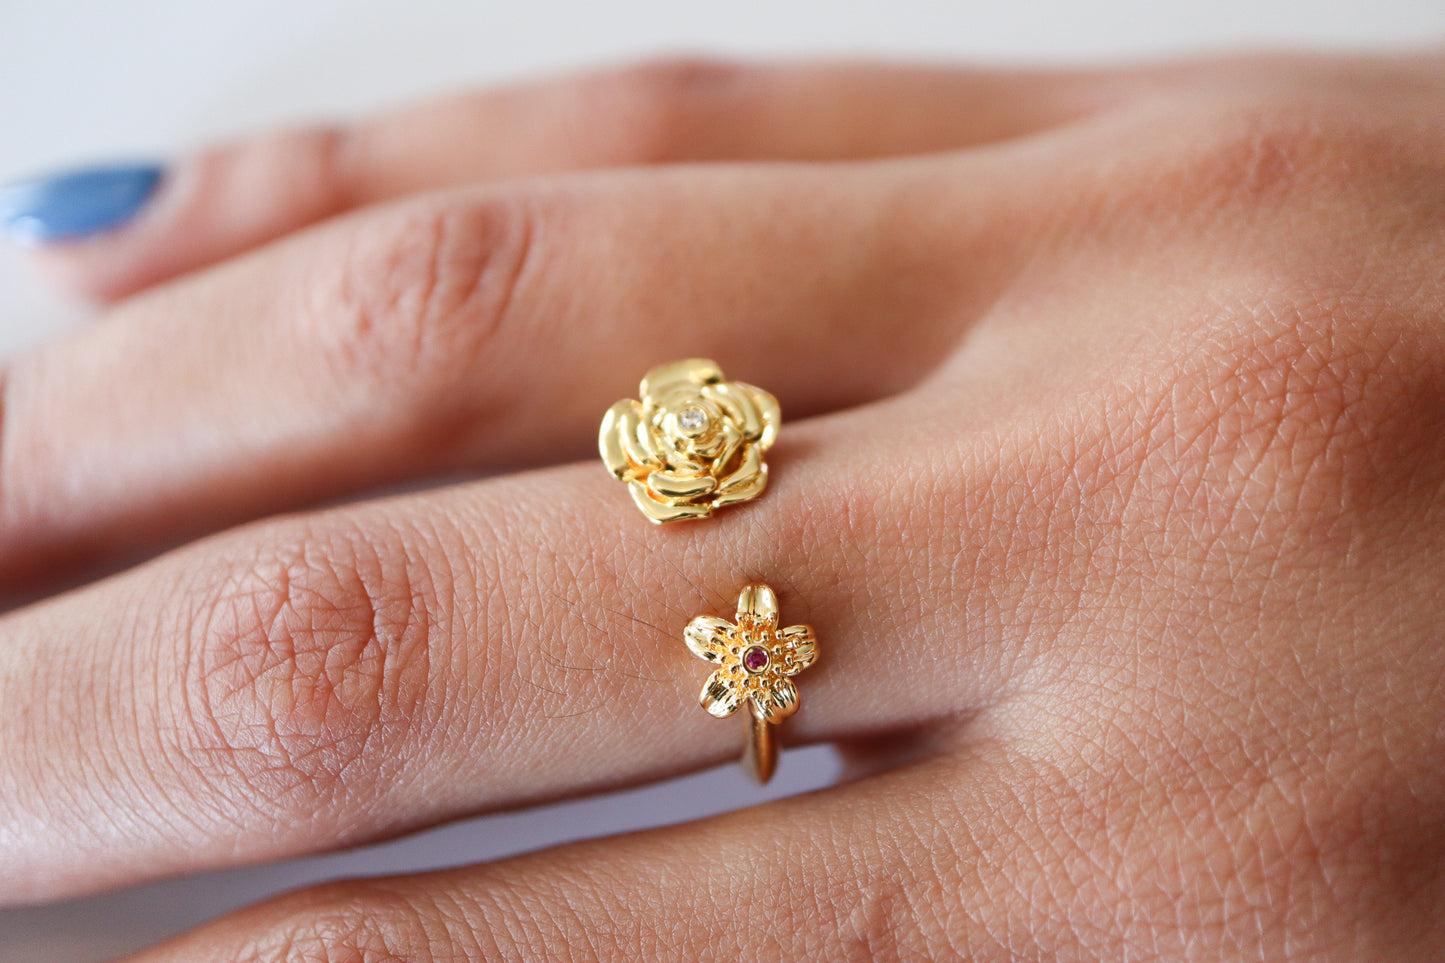 Blossom Gold Ring